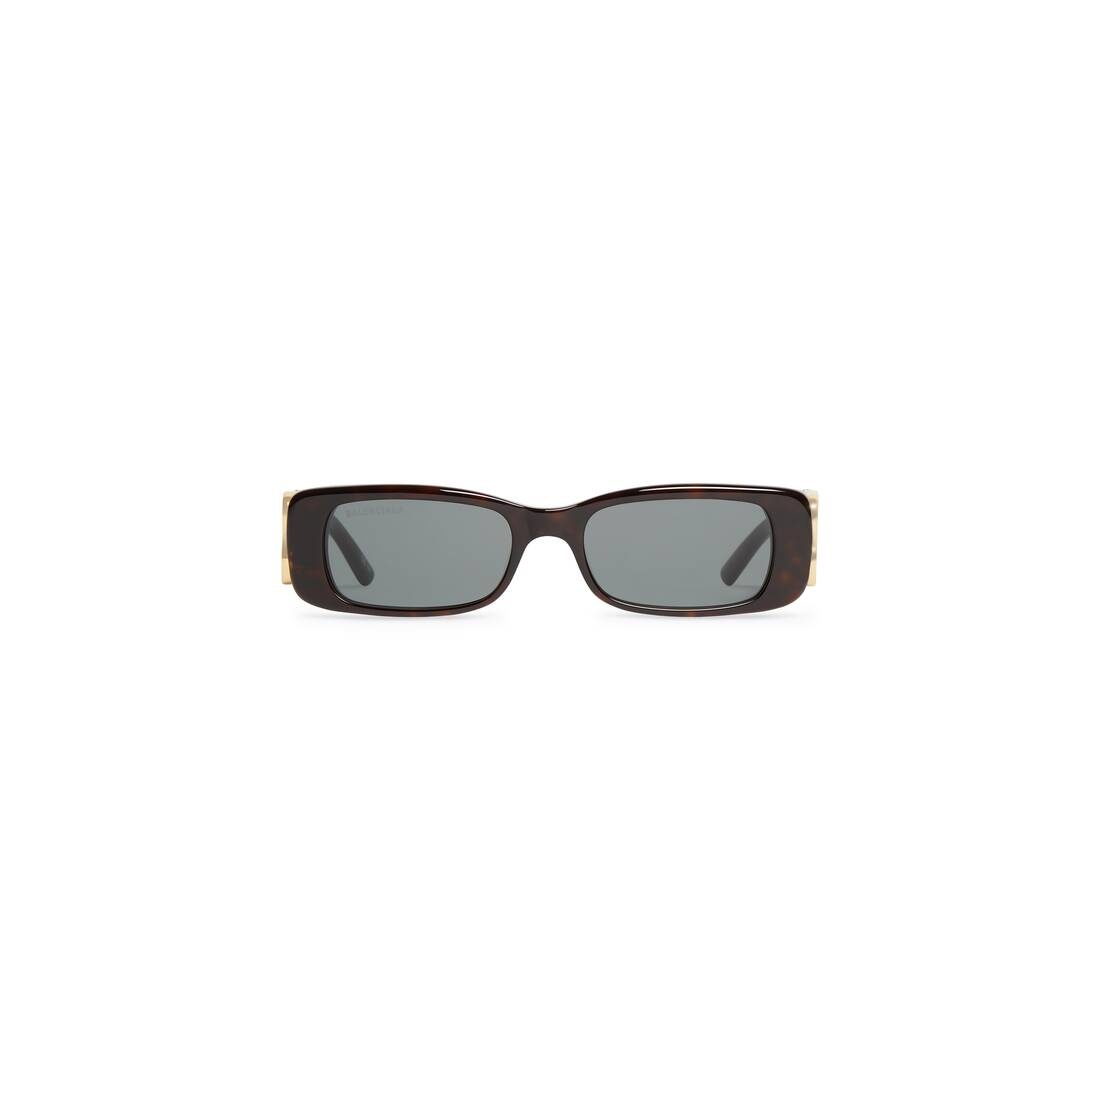 dynasty rectangle sunglasses - 1